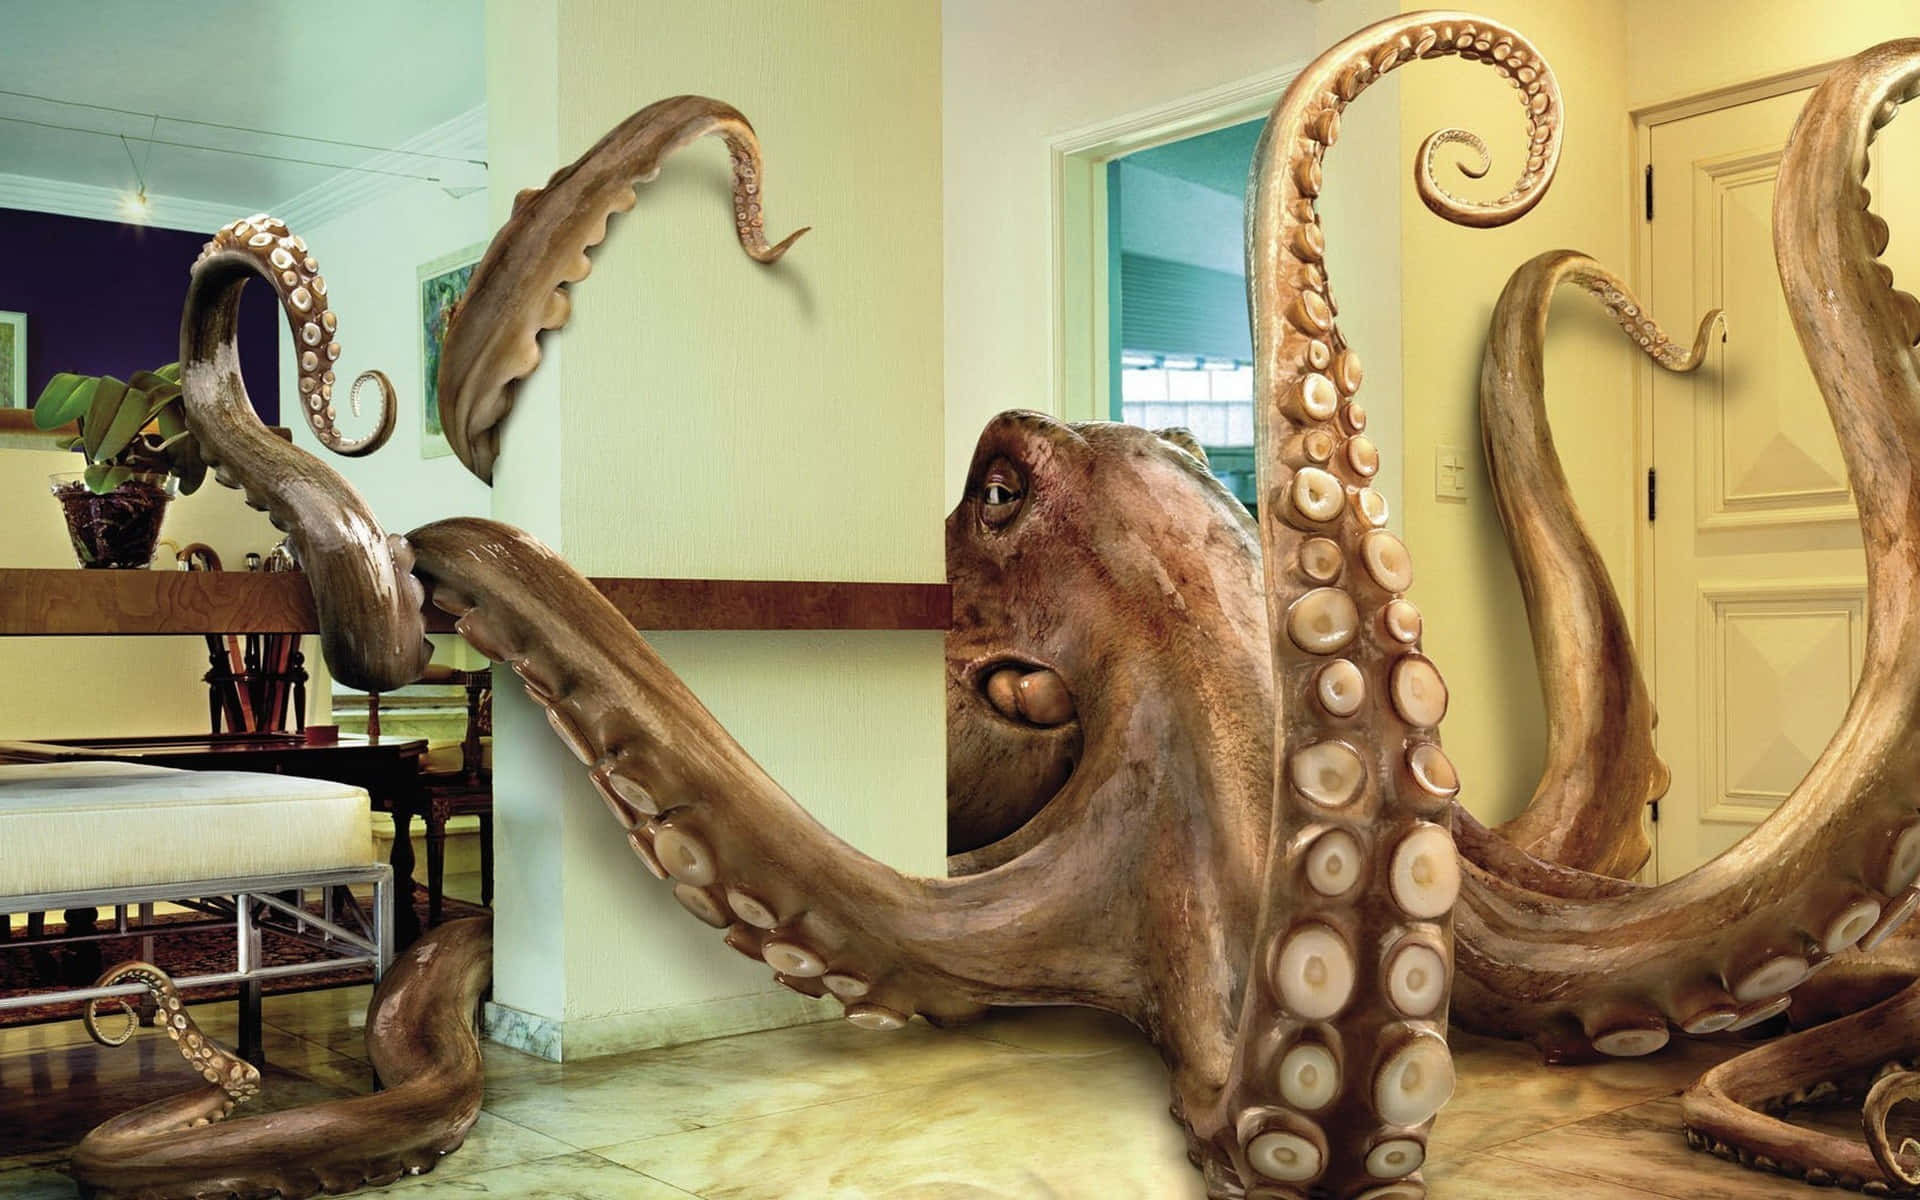 : An Octopus in its Natural Habitat